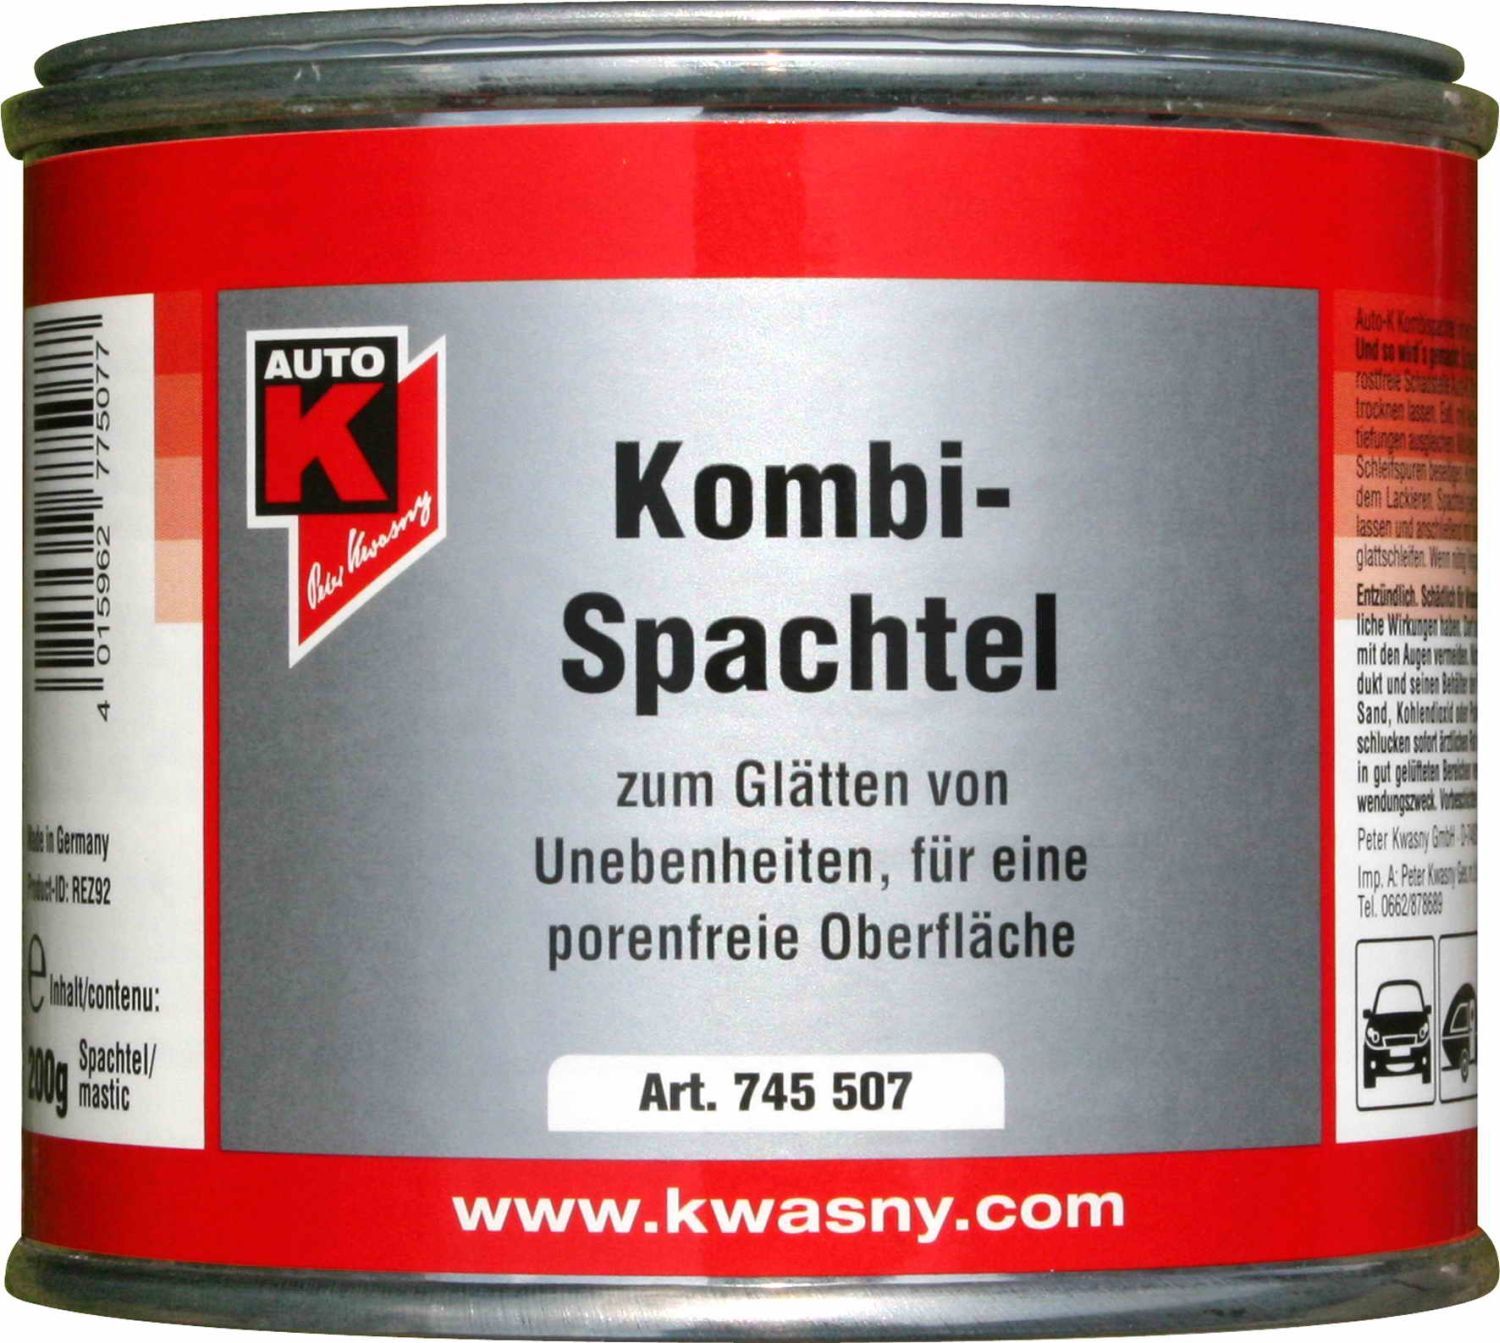 Peter Kwasny GmbH Auto-K KOMBI-SPACHTEL DOSE 200G